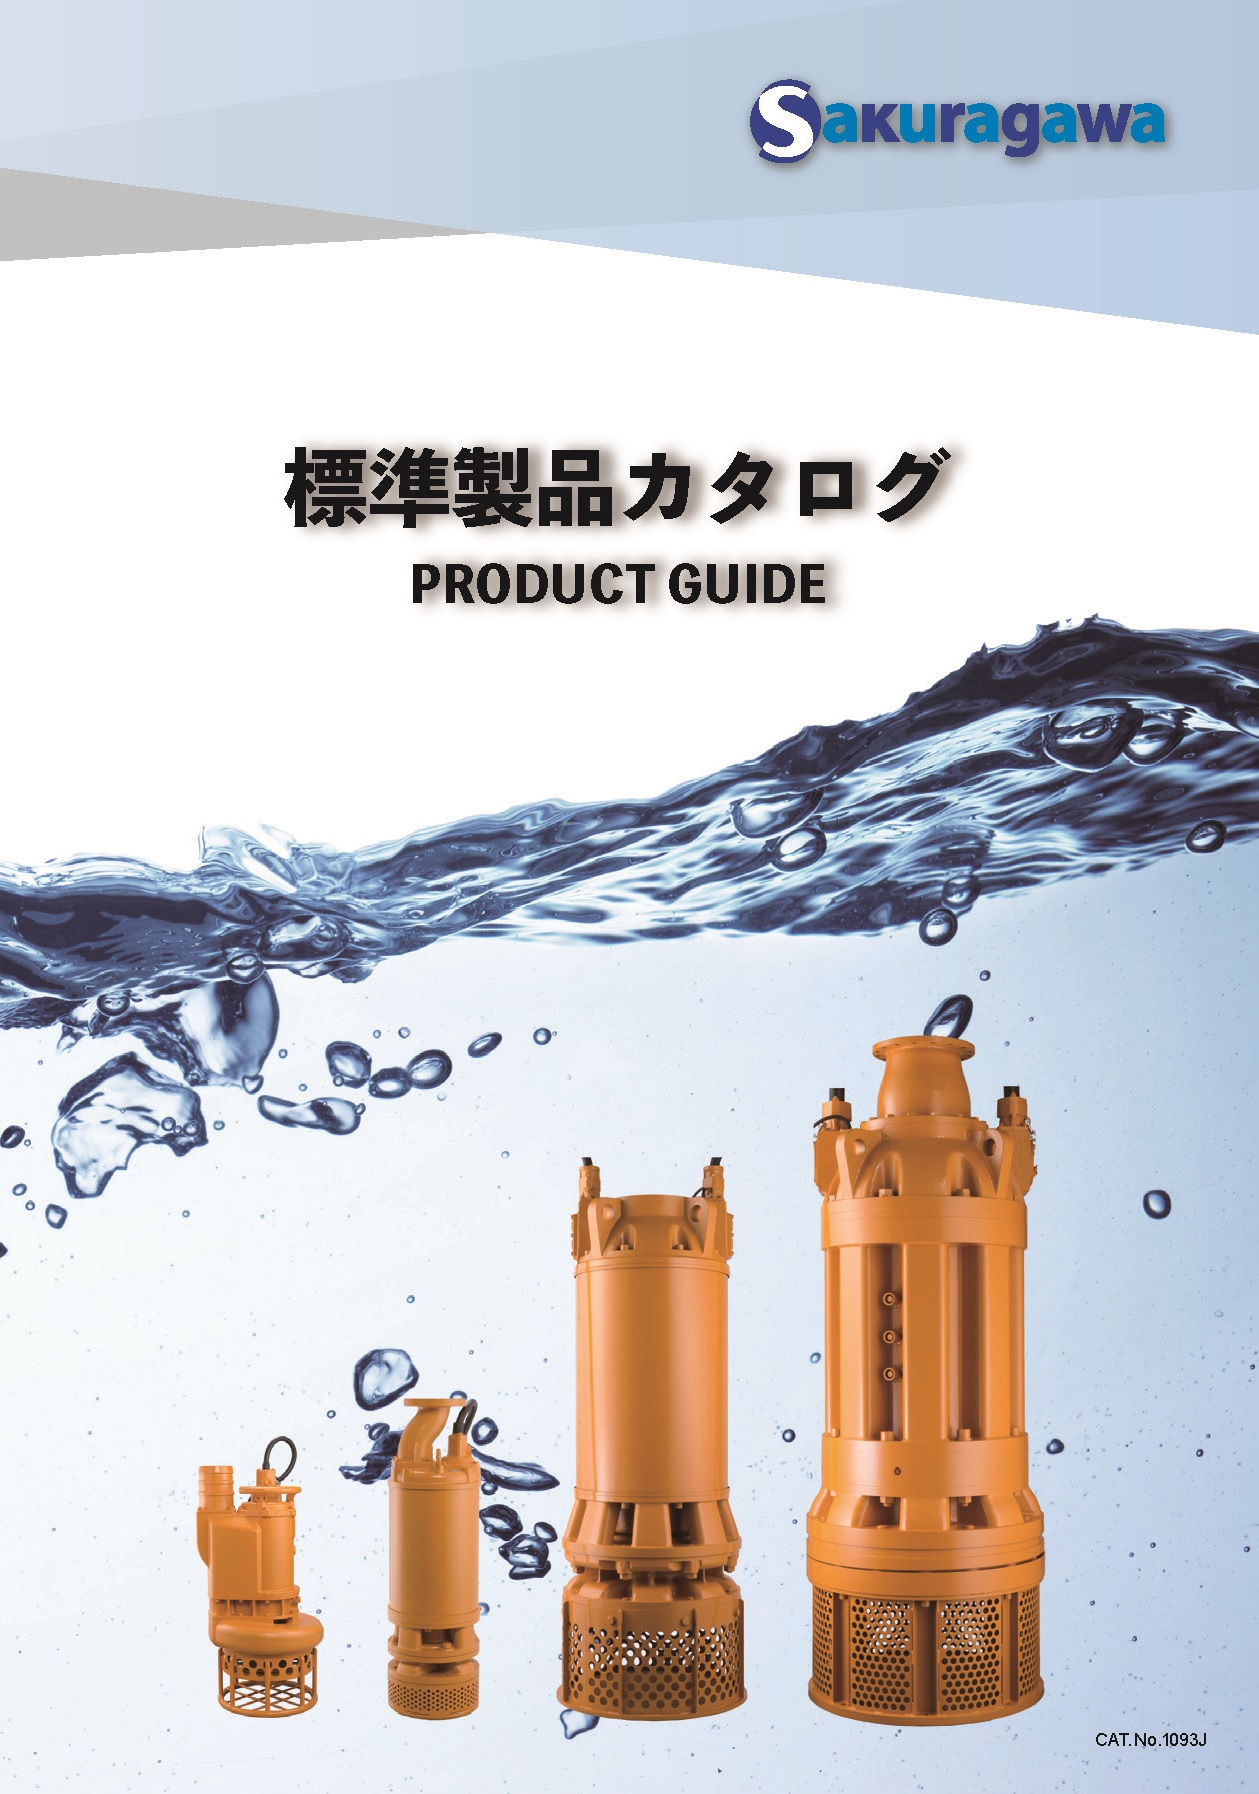 UOX/UOX-Wシリーズ | 製品情報 | 櫻川ポンプ製作所